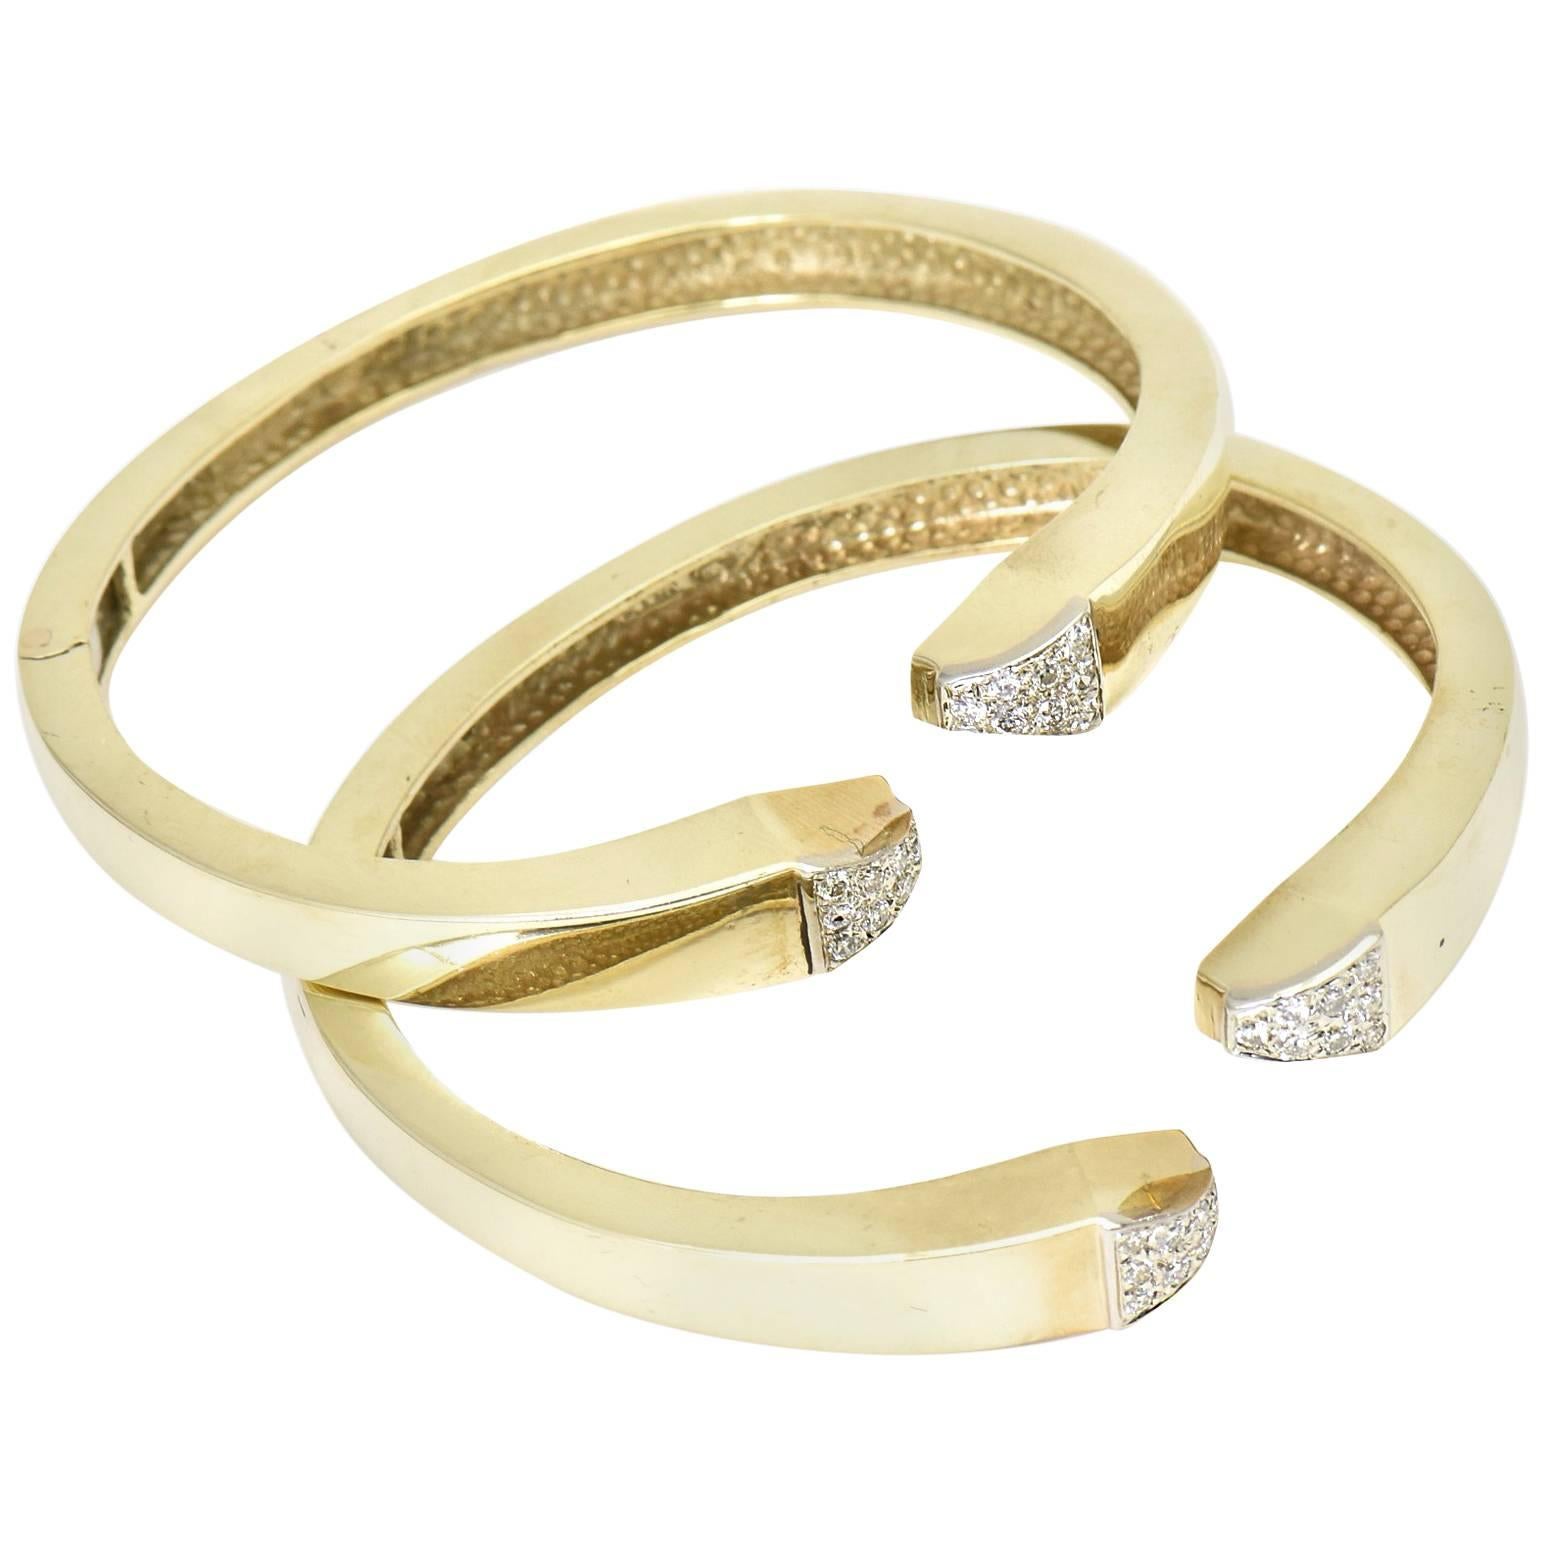 Pave Diamond and Gold Geometric Bangle Bracelets, Pair